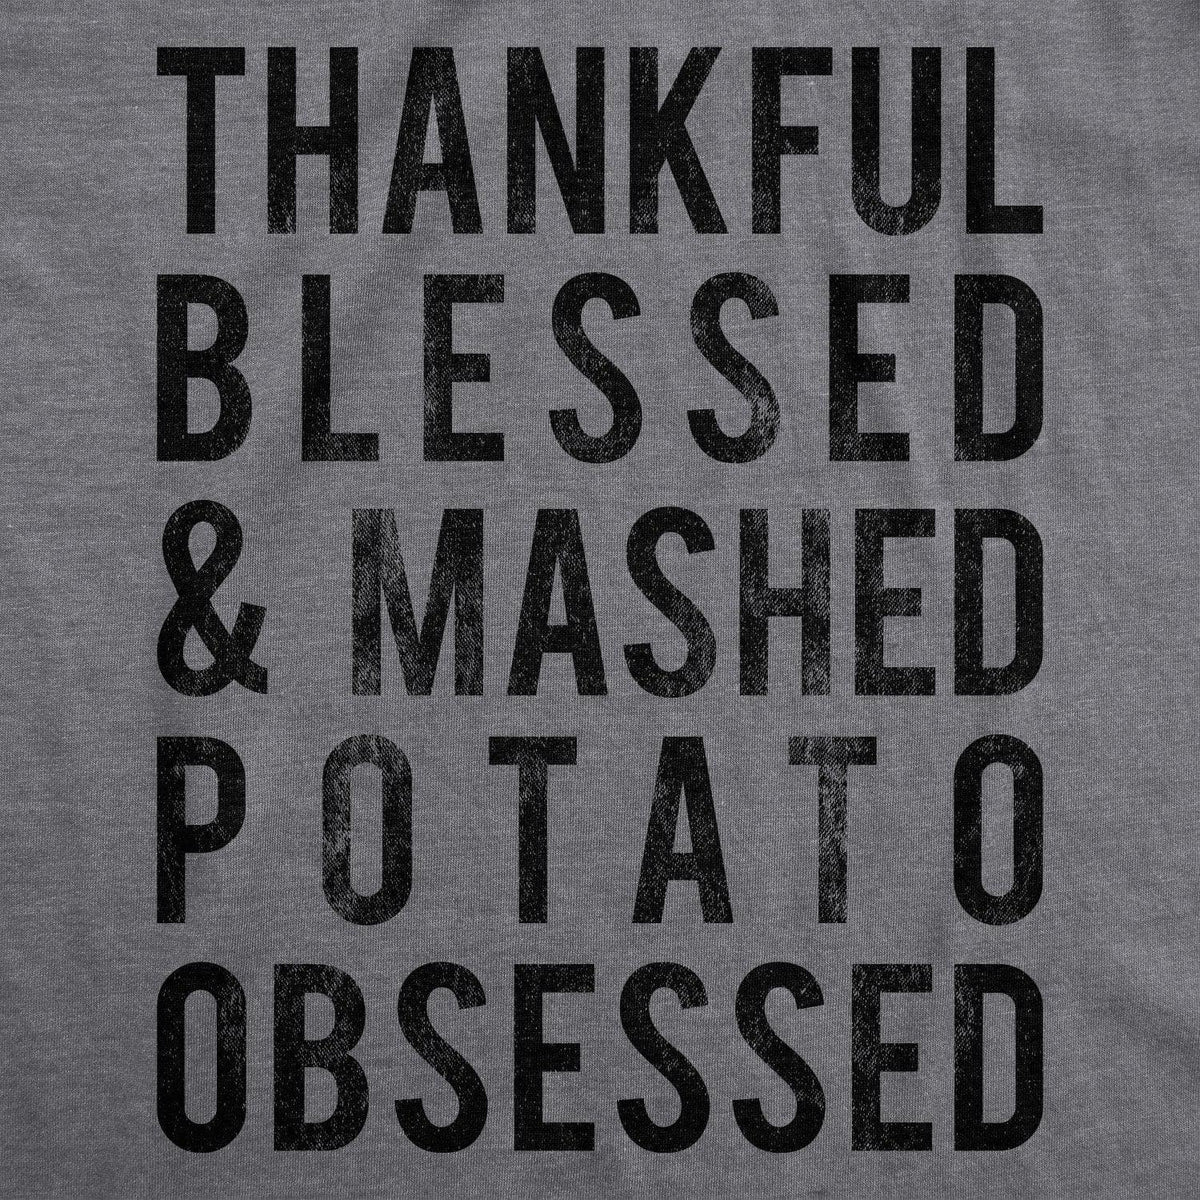 Mashed Potato Obsessed Men&#39;s Tshirt  -  Crazy Dog T-Shirts